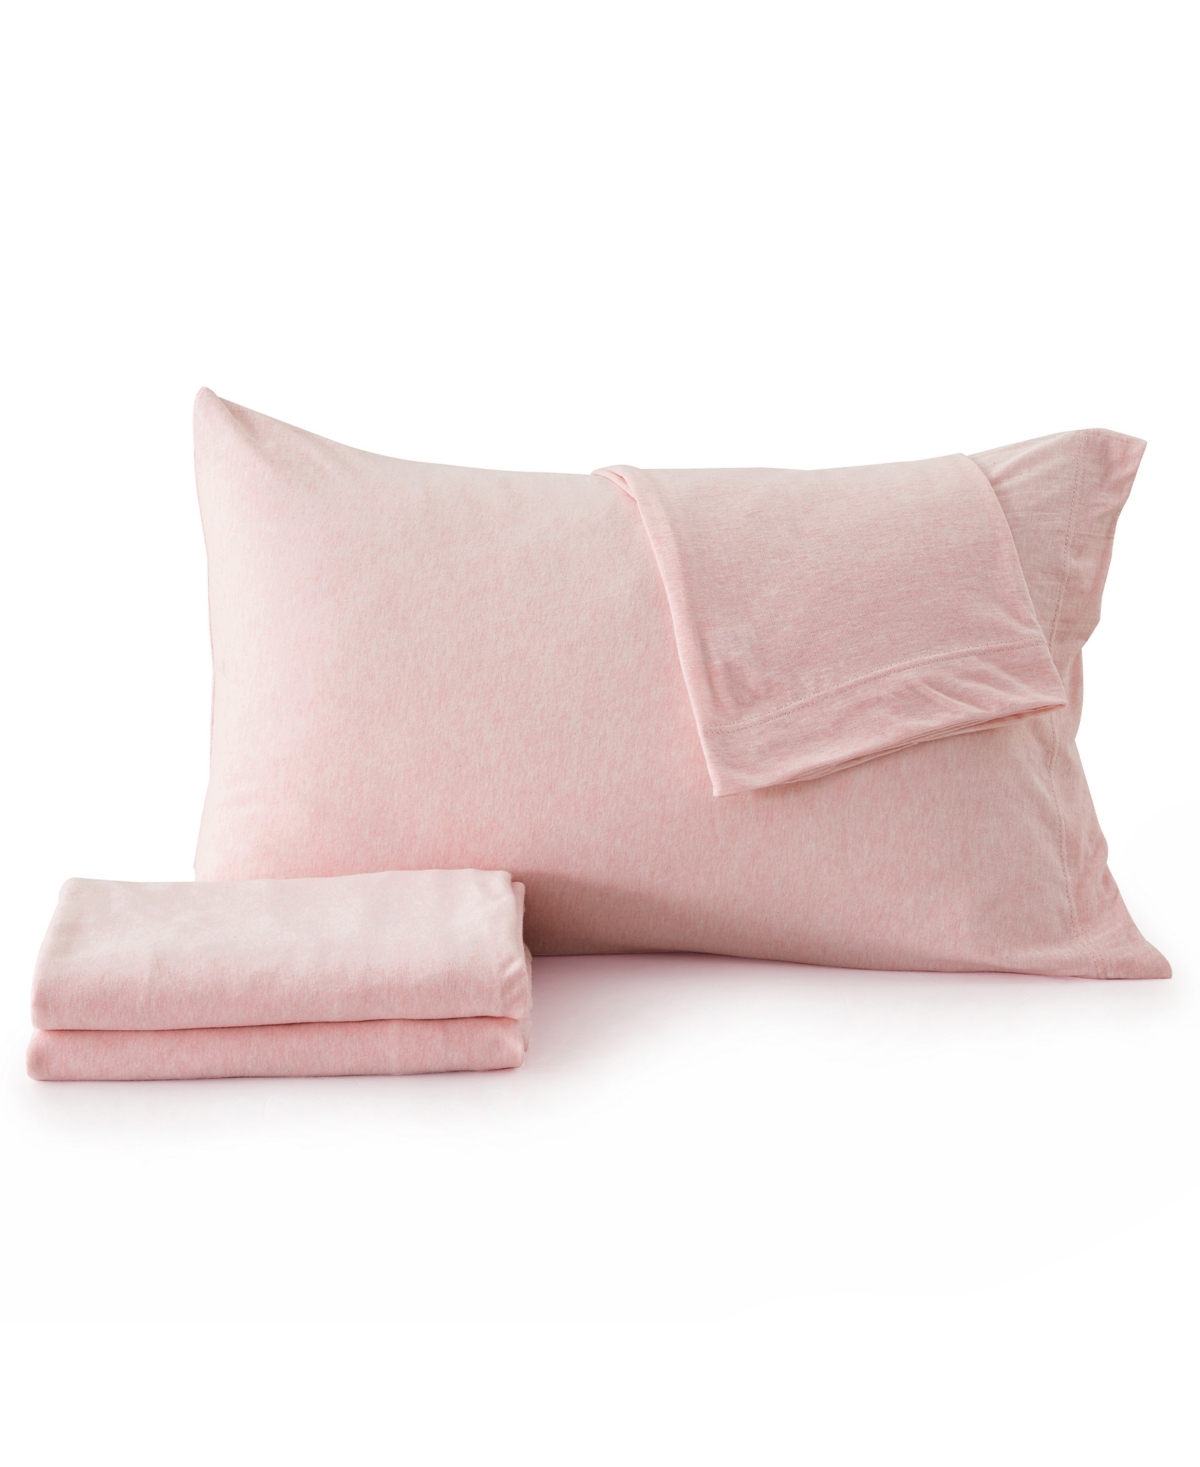 Premium Comforts Heathered Melange T-shirt Jersey Knit Cotton Blend 4 Piece Sheet Set, Twin Xl In Pink